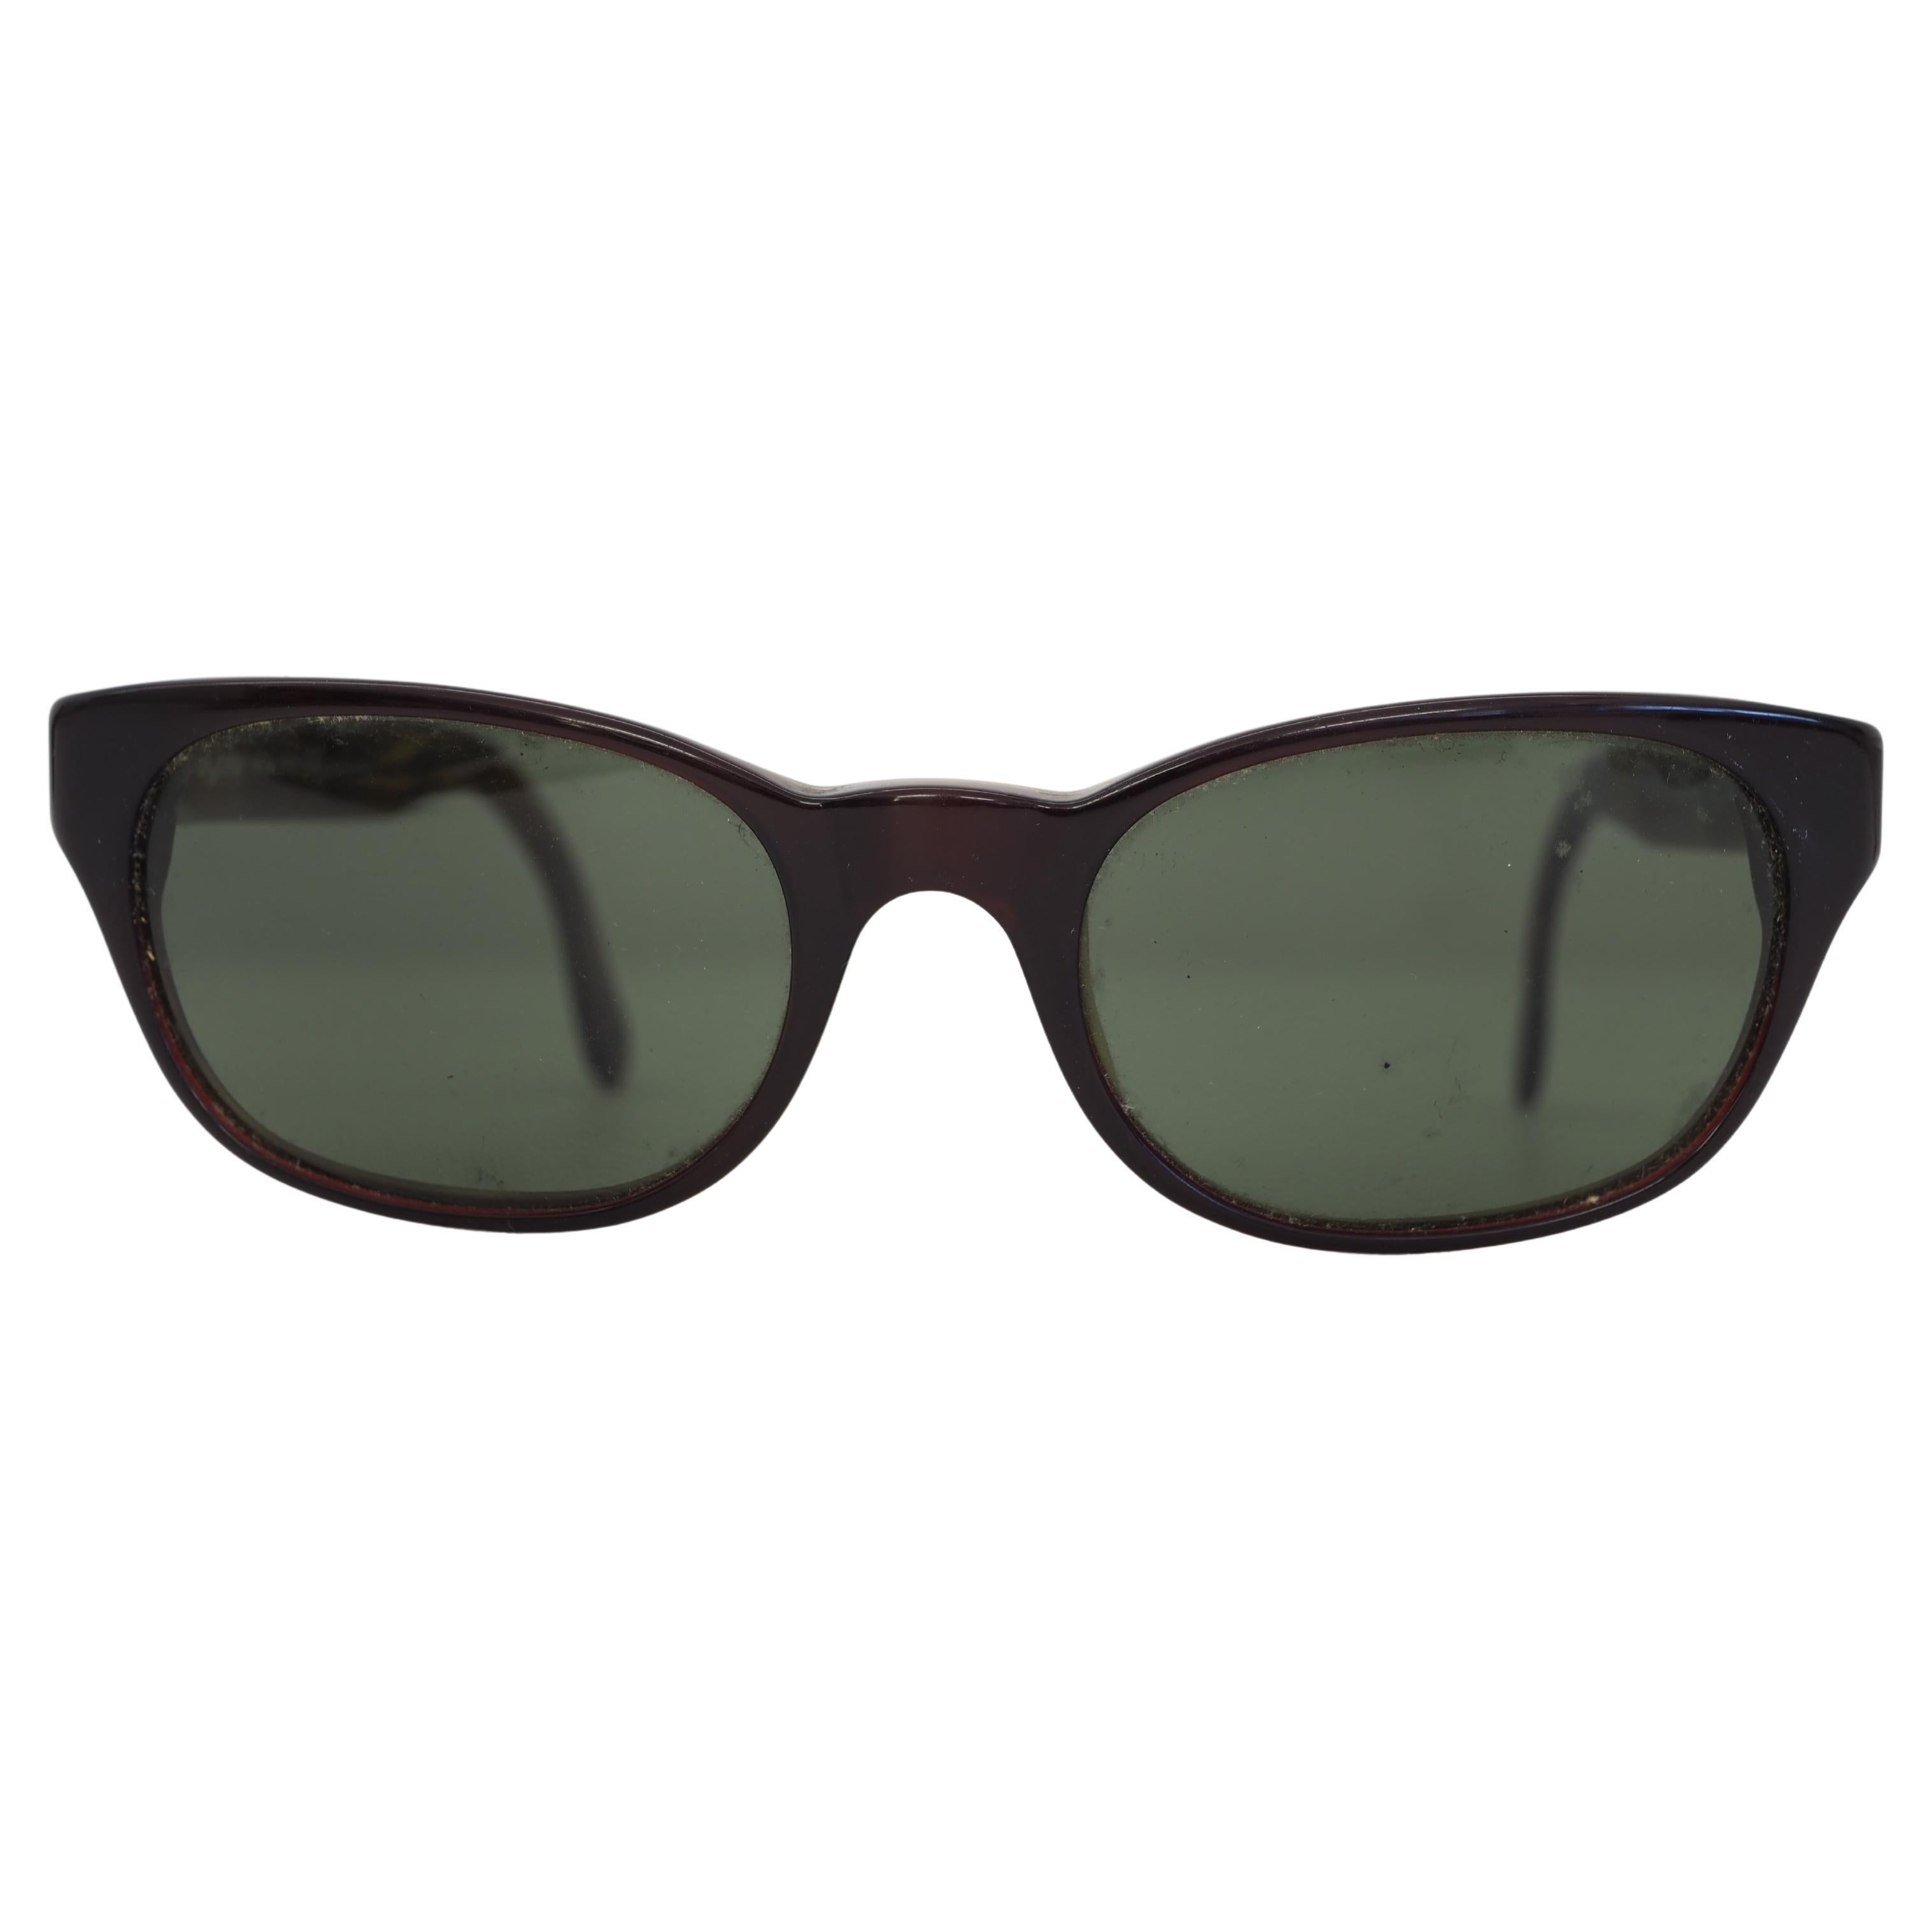 Byblos brown sunglasses For Sale